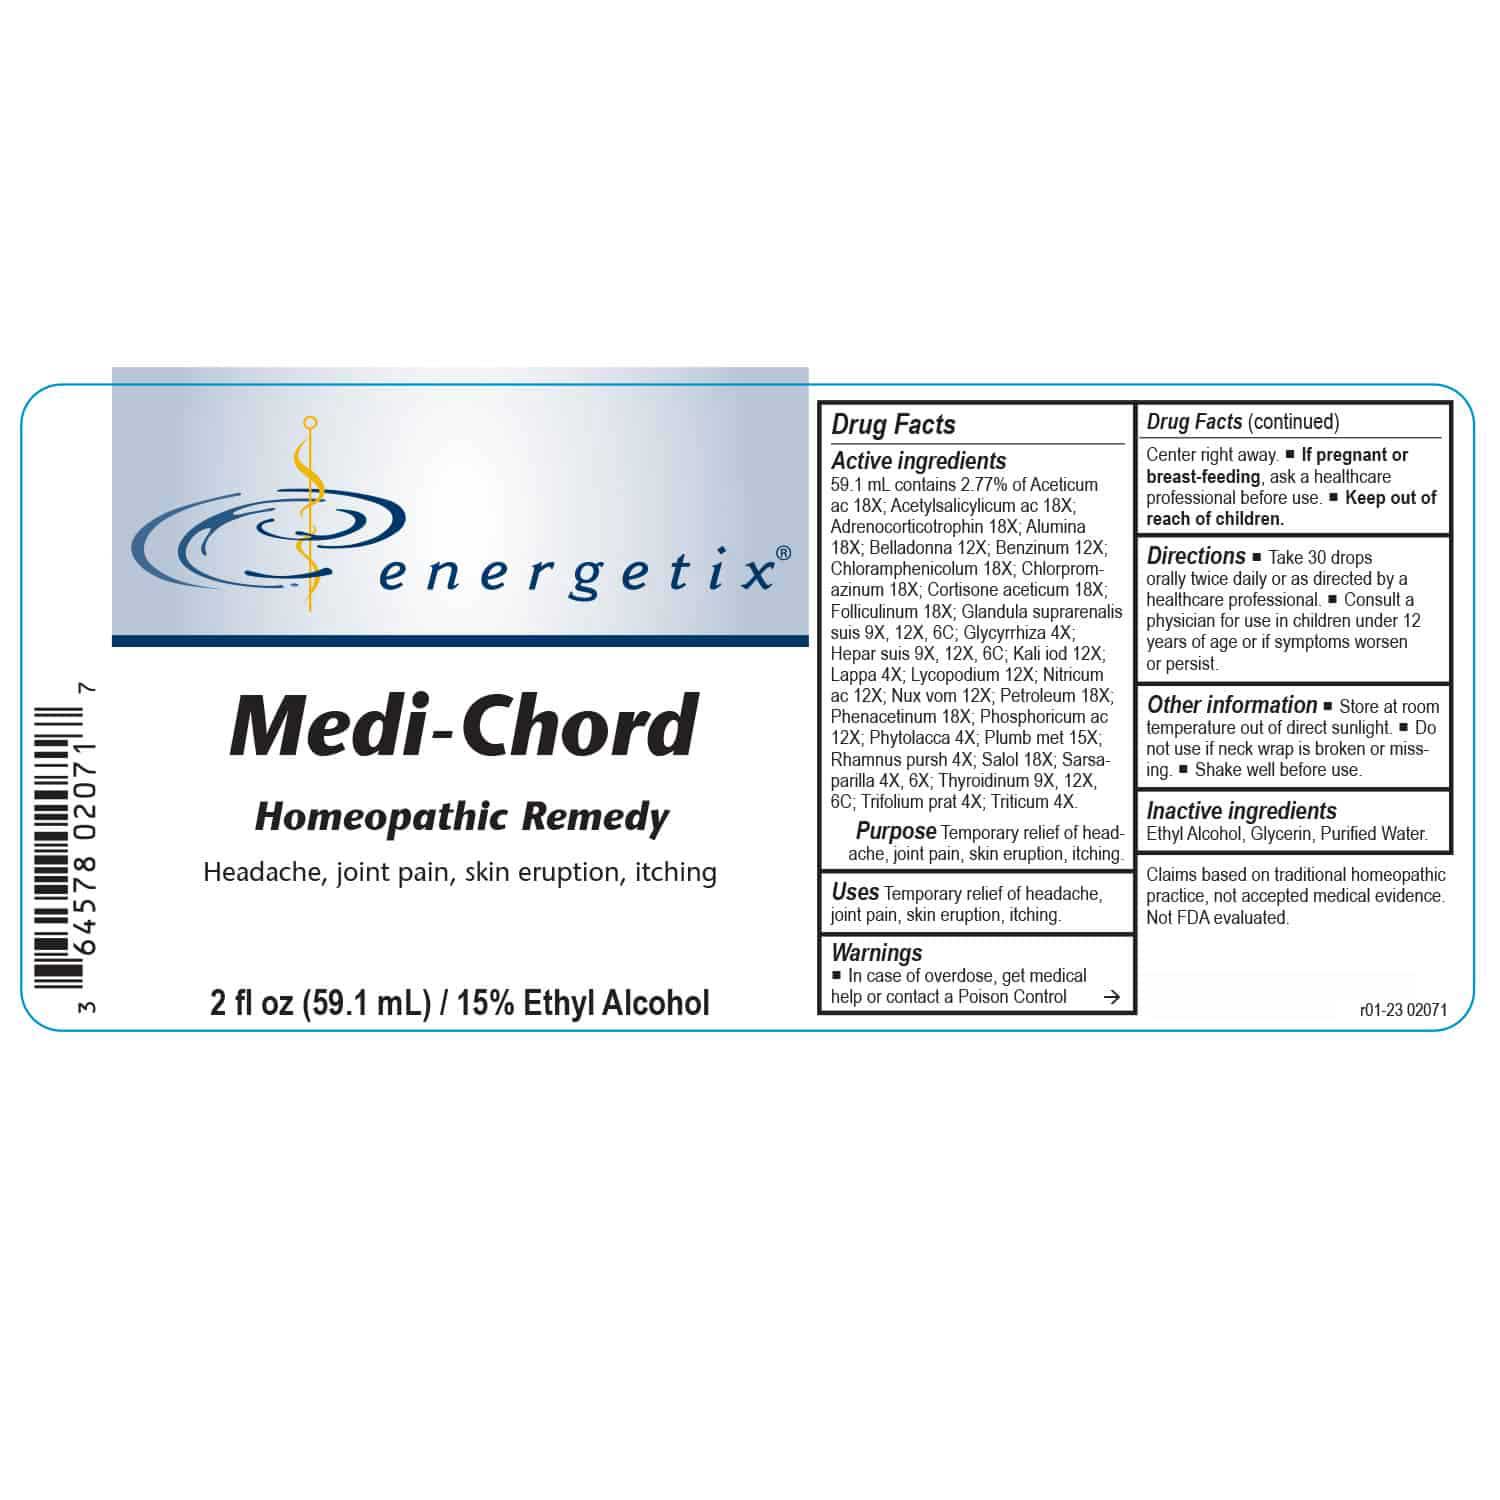 Energetix Medi-Chord Label